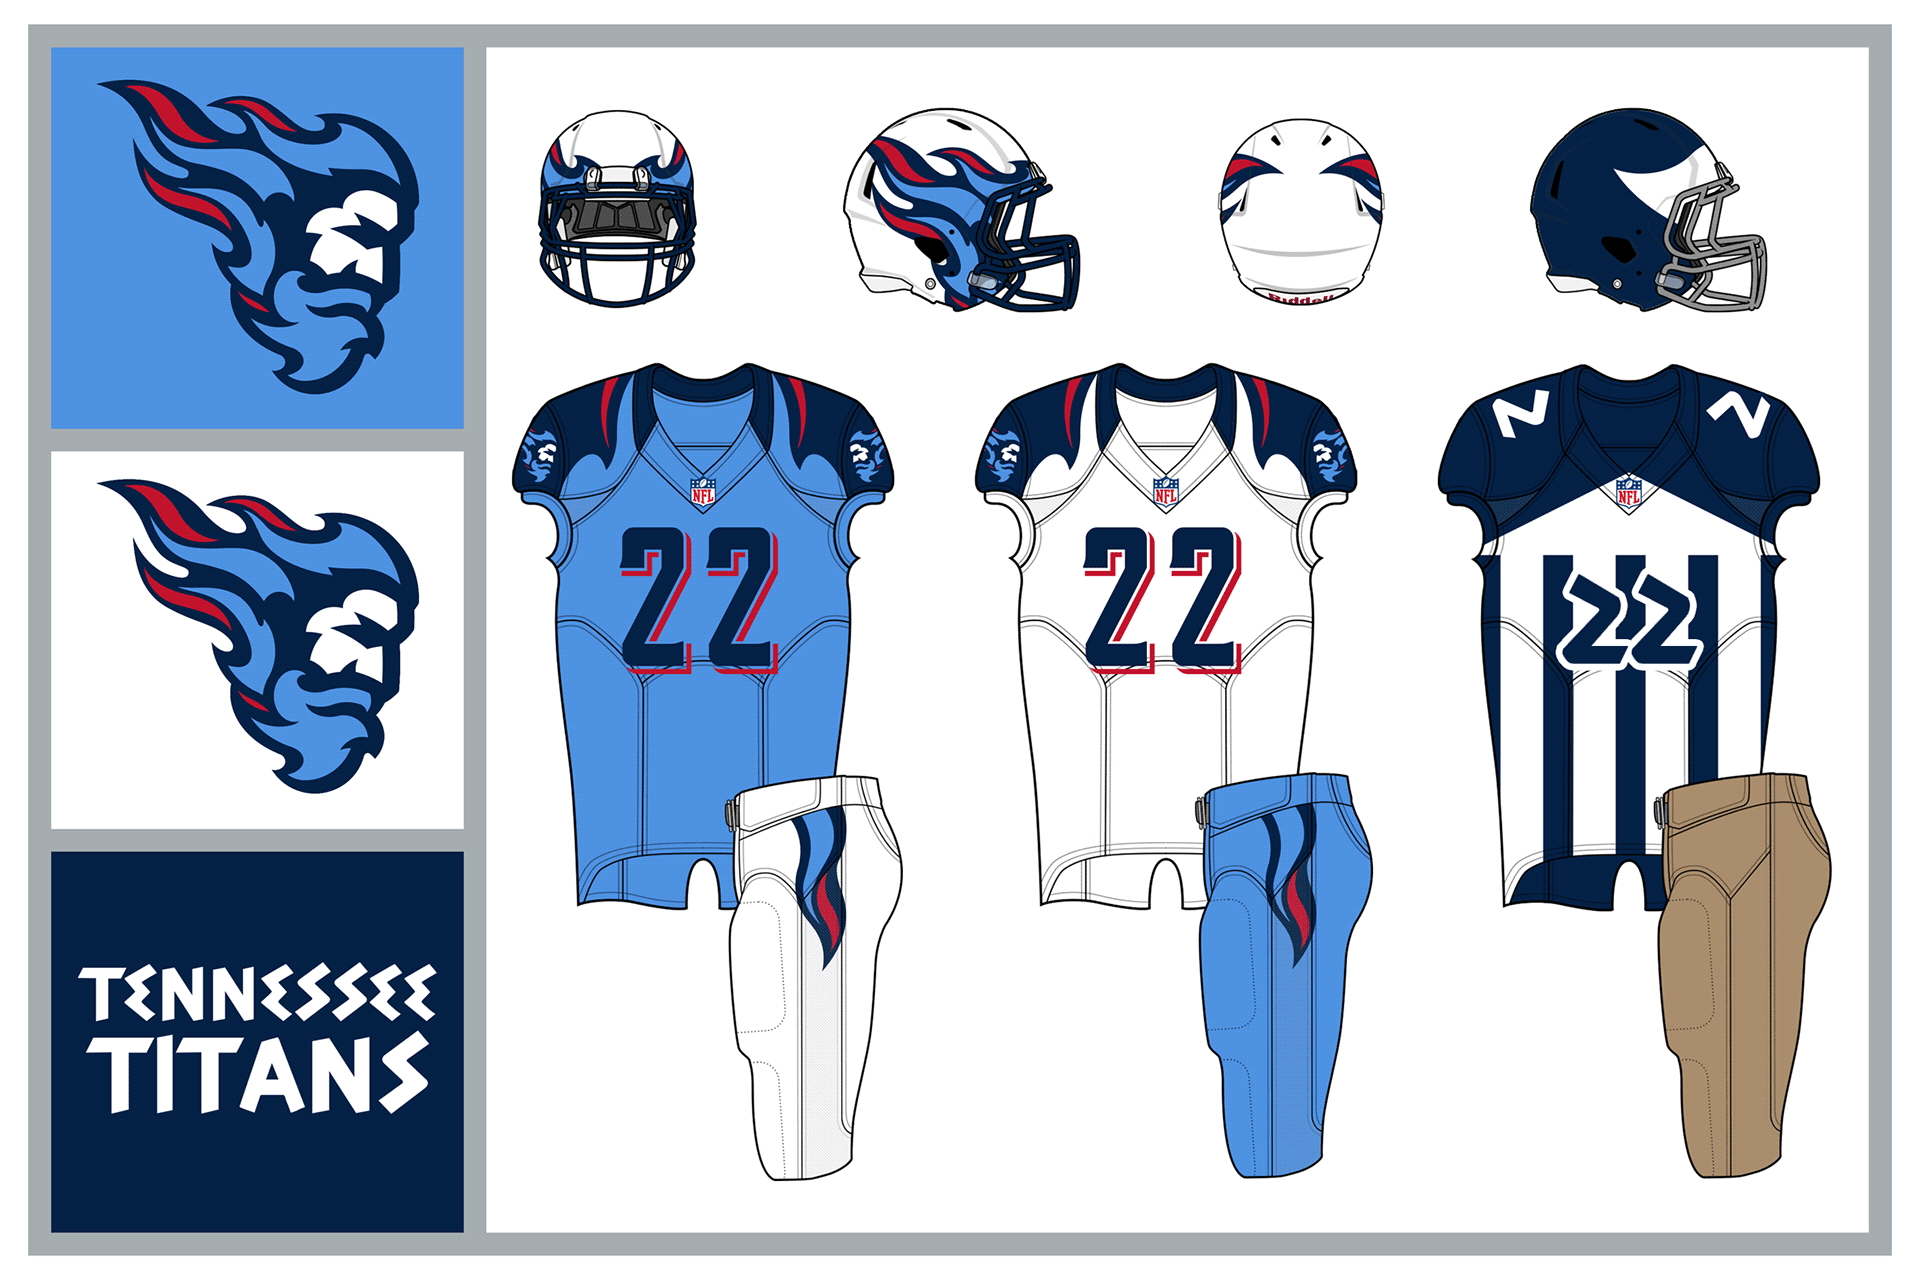 tennessee titans uniform concepts